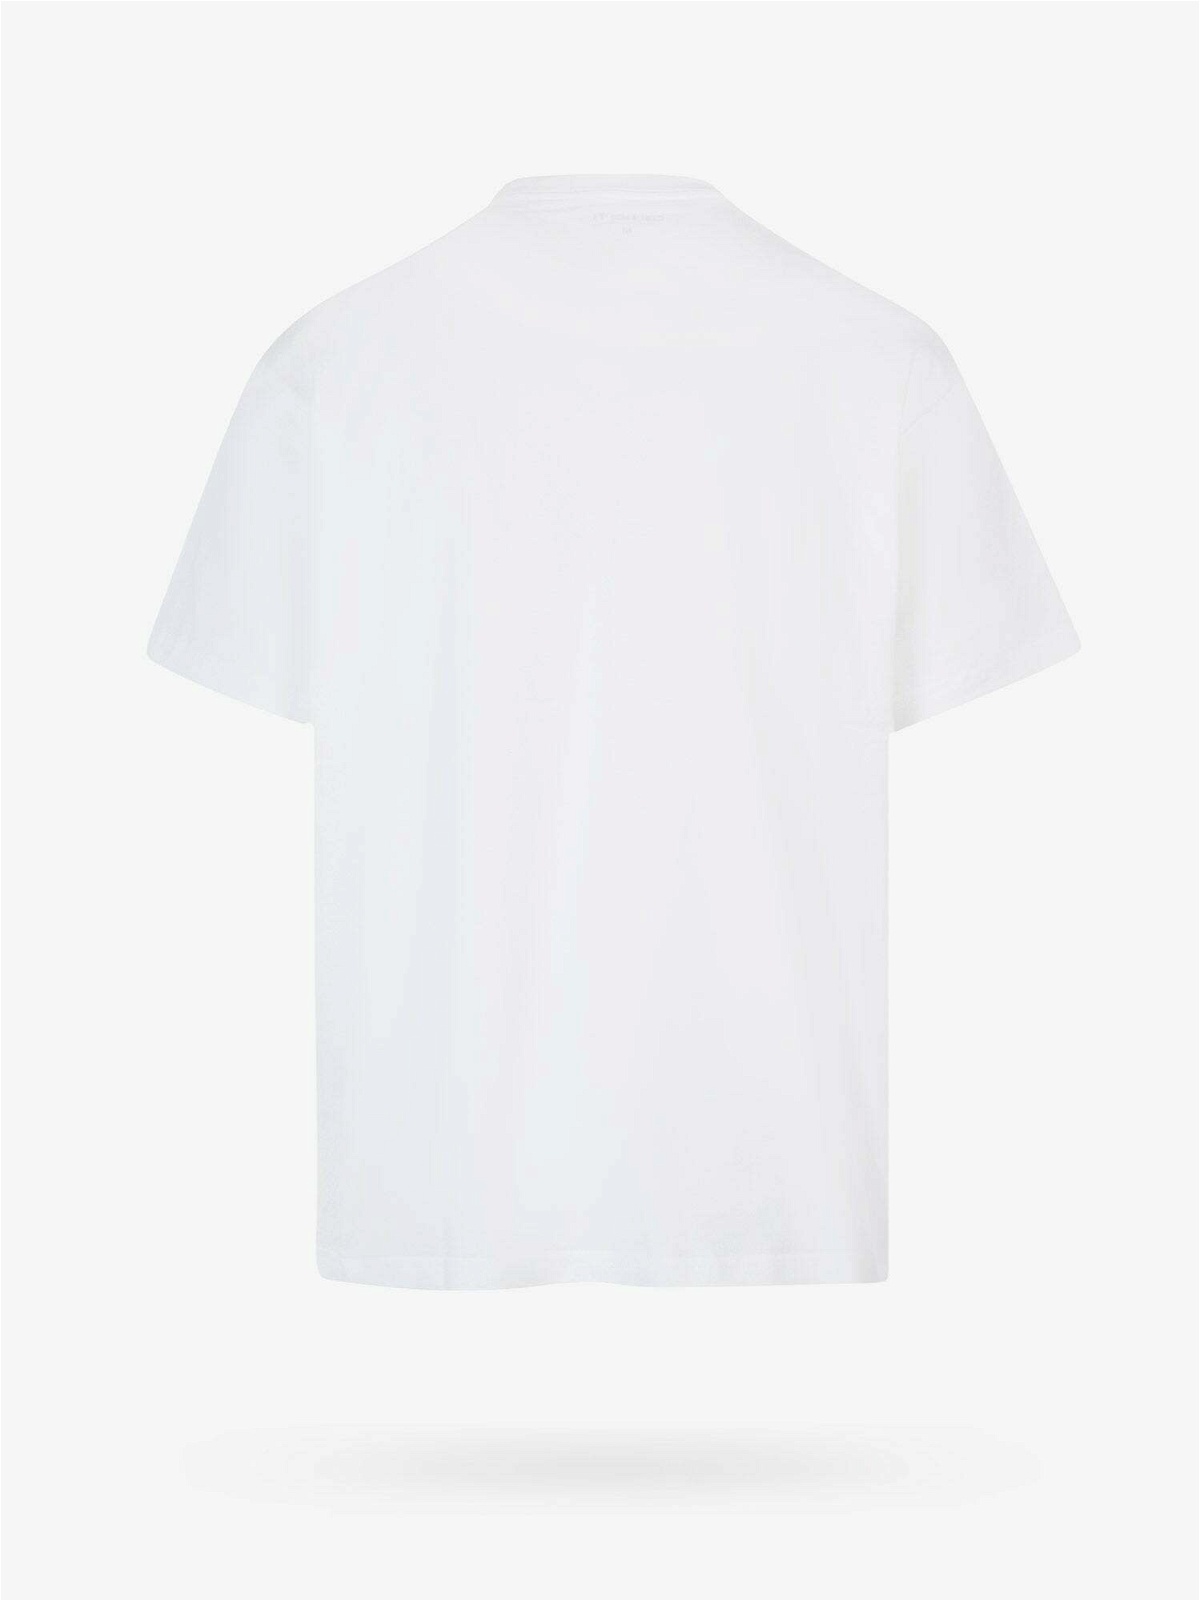 Carhartt Wip T Shirt White Mens Carhartt WIP